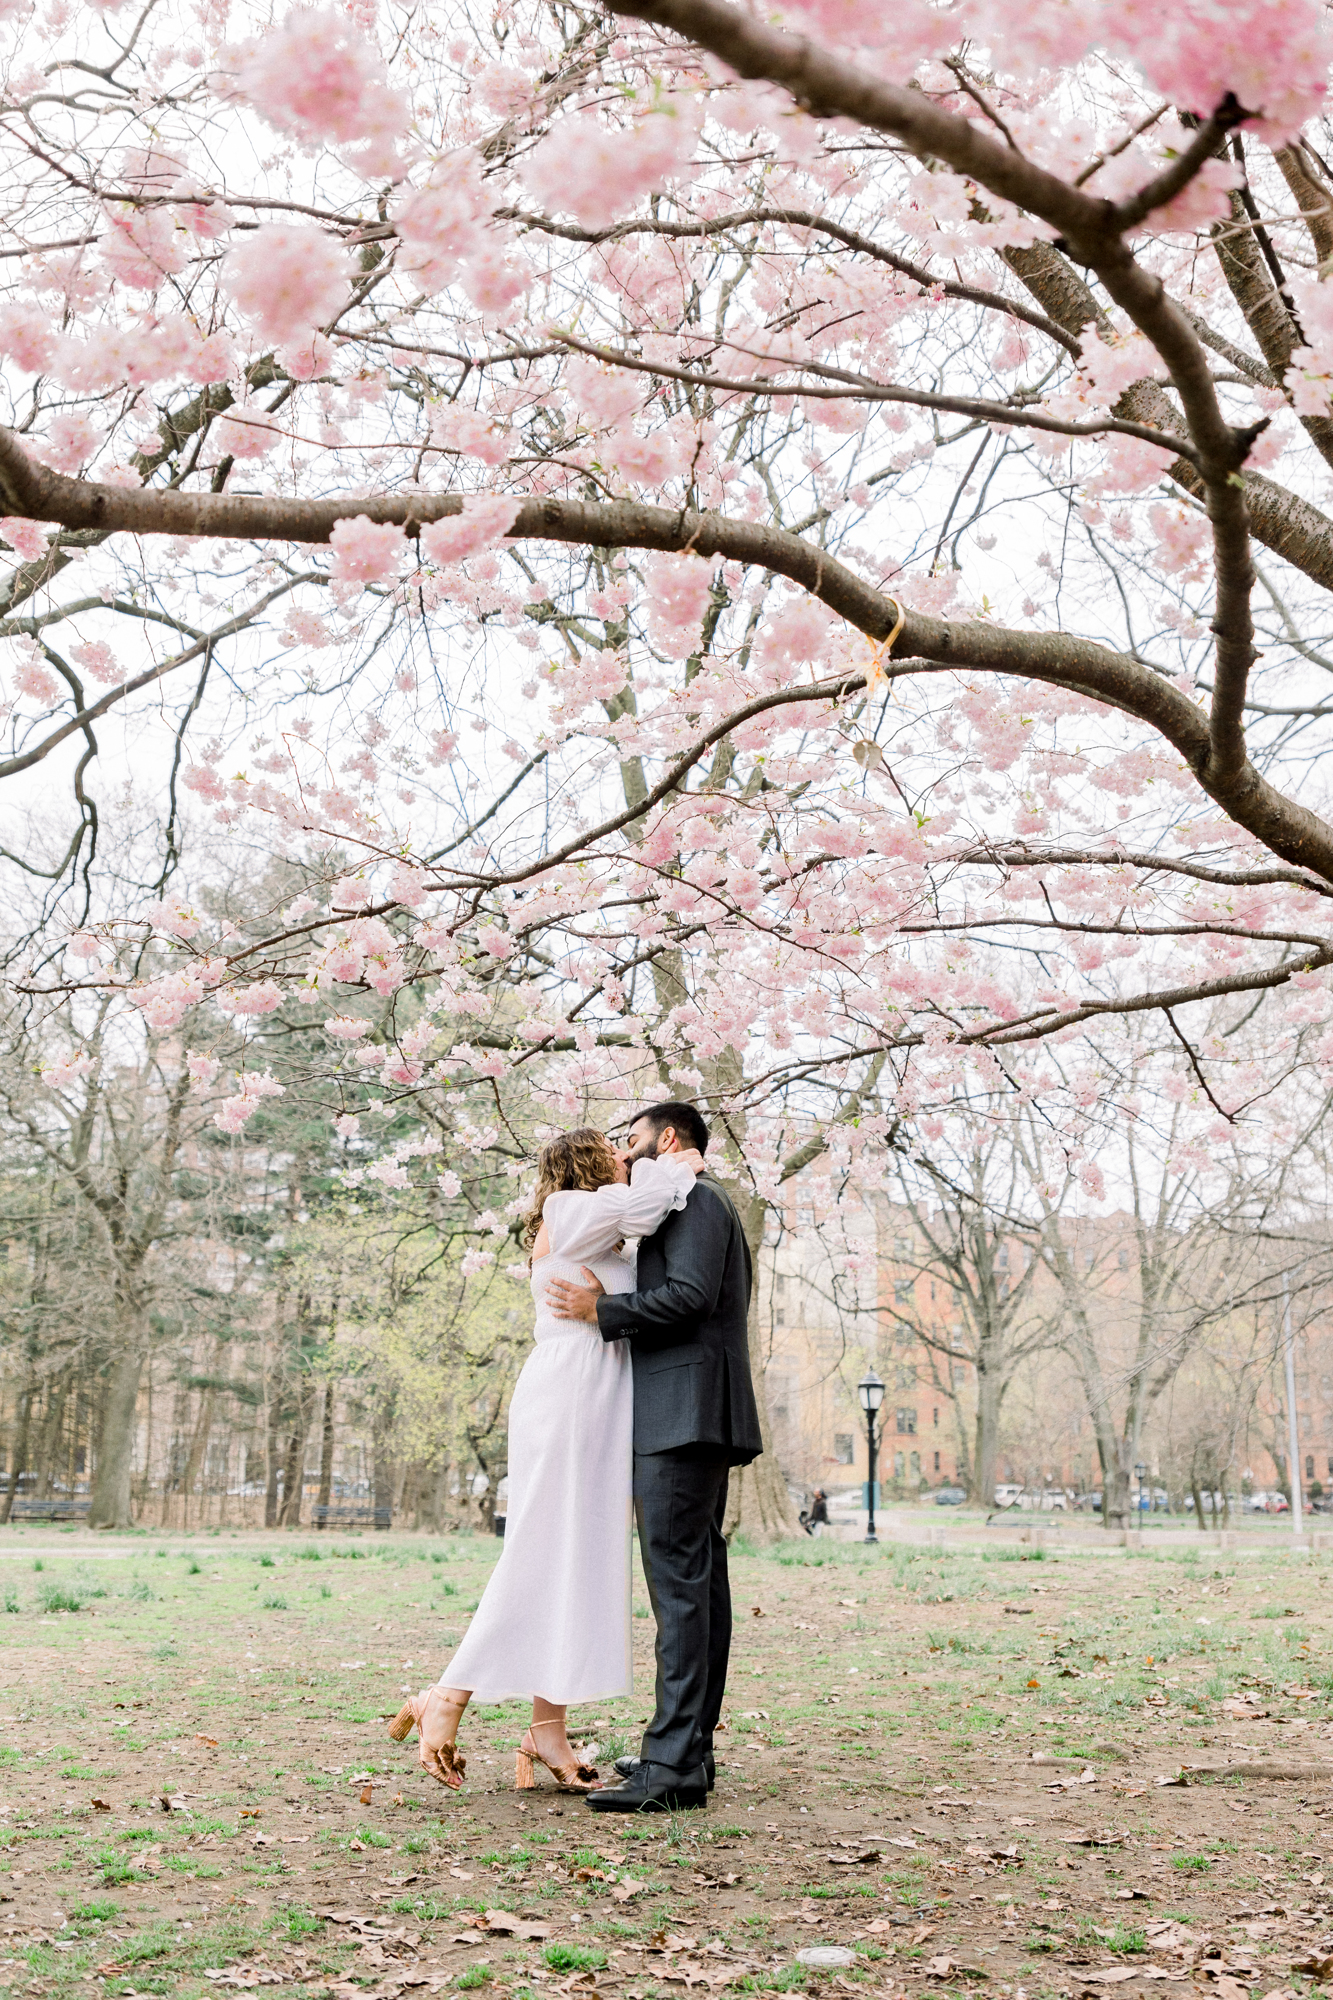 Stunning Prospect Park Wedding Photos with Springtime Cherry Blossoms